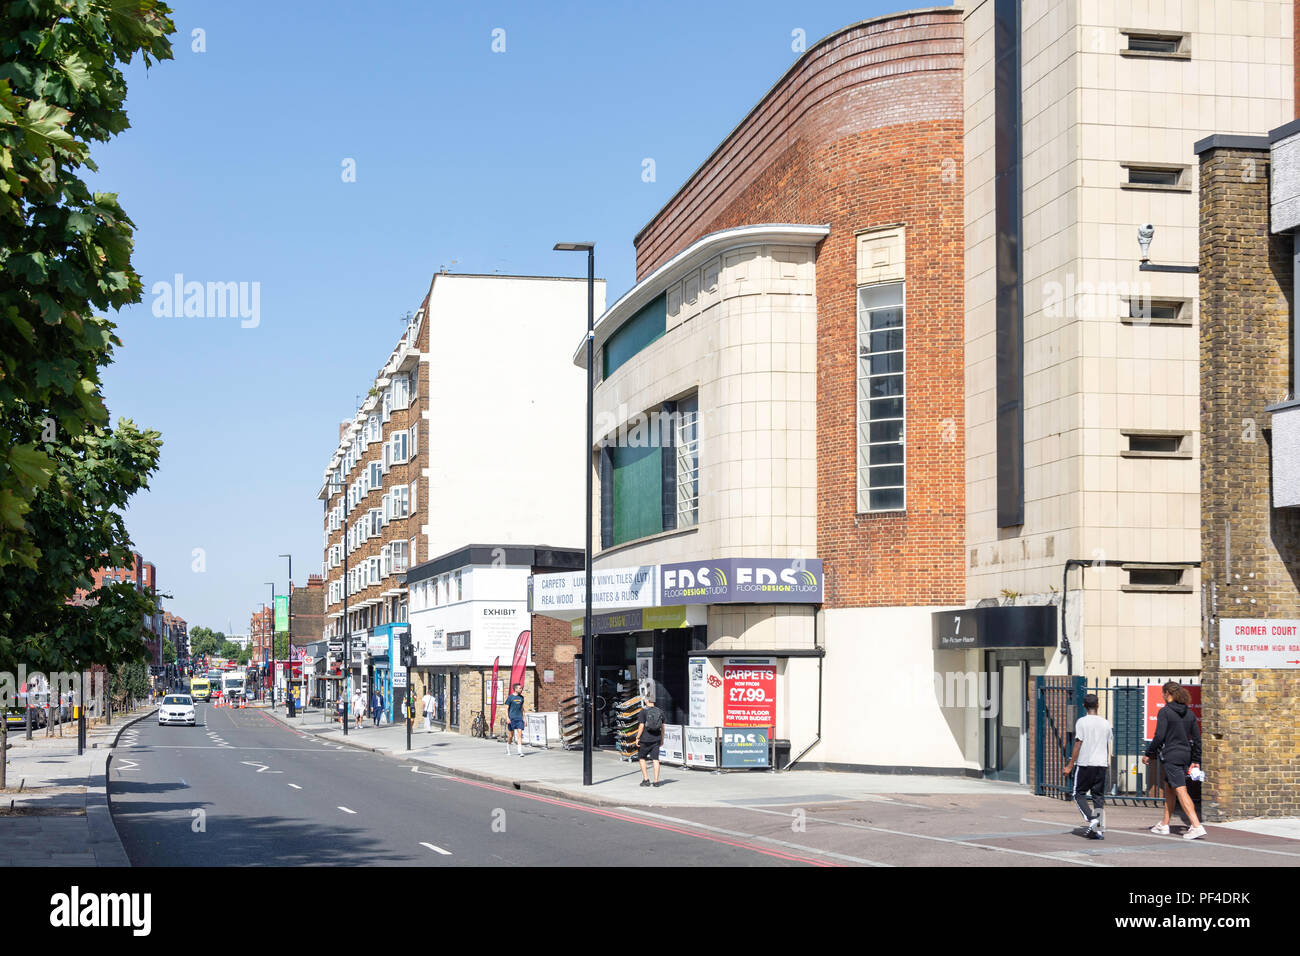 Streatham High Road, Streatham, London Borough der Wandsworth, Greater London, England, Vereinigtes Königreich Stockfoto